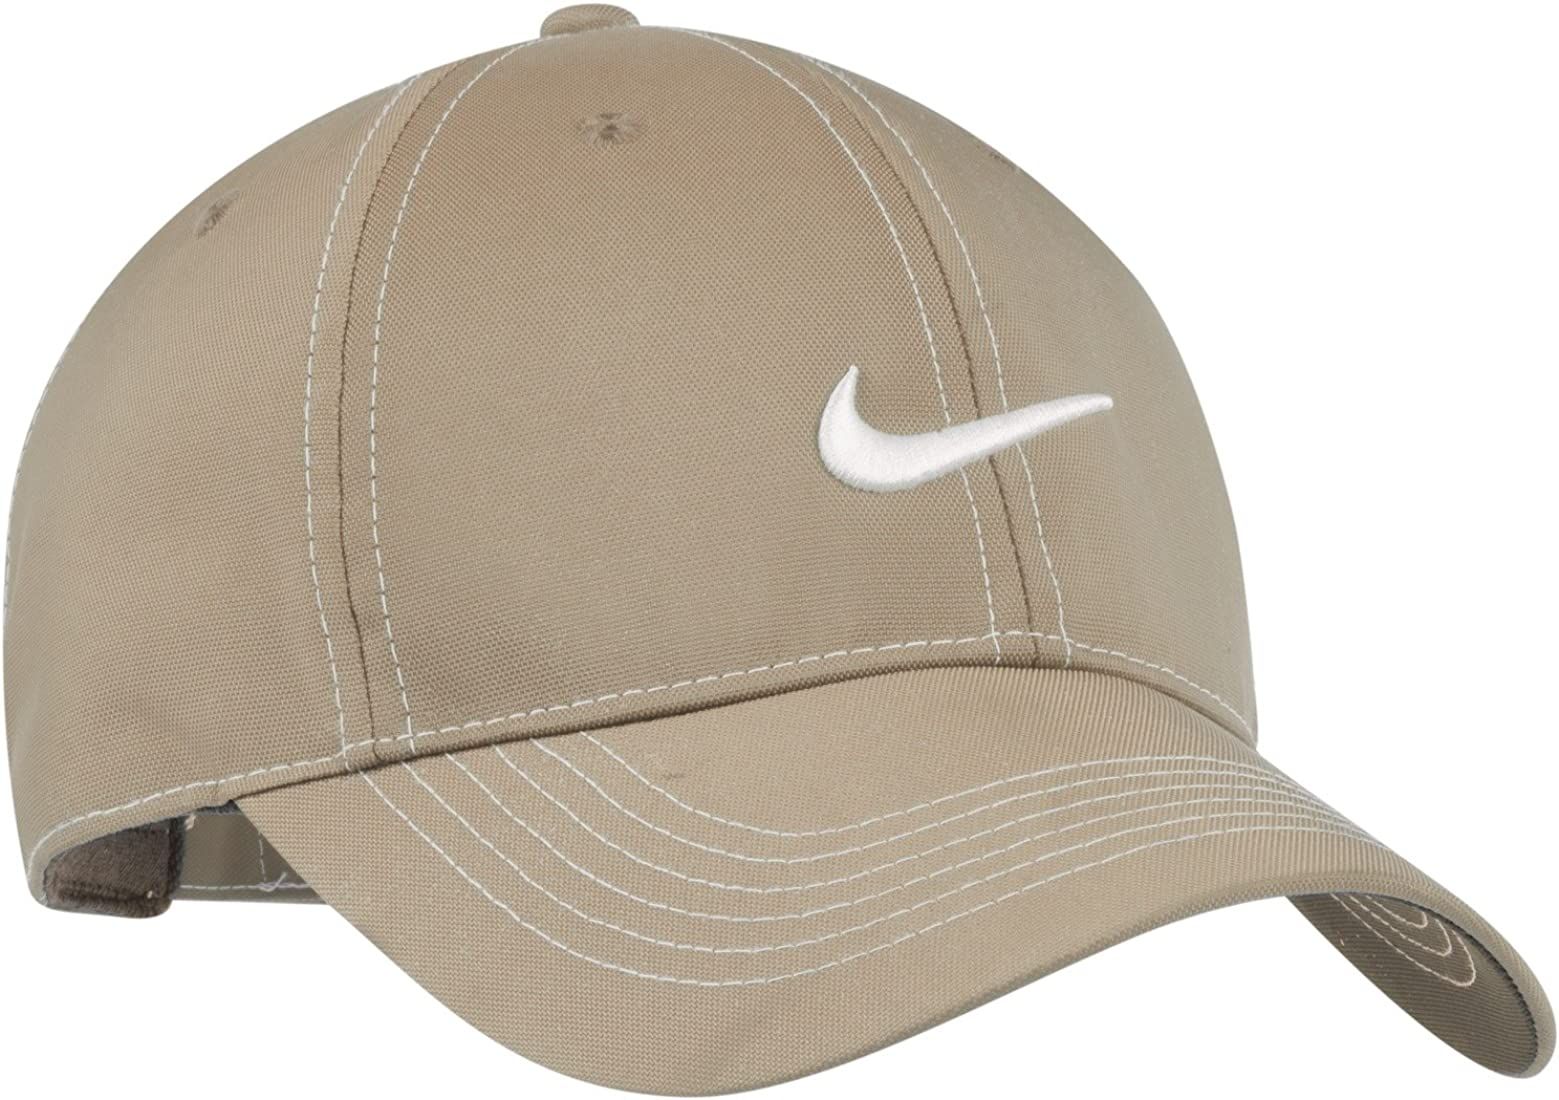 Nike Golf - Swoosh Front Cap | Amazon (US)